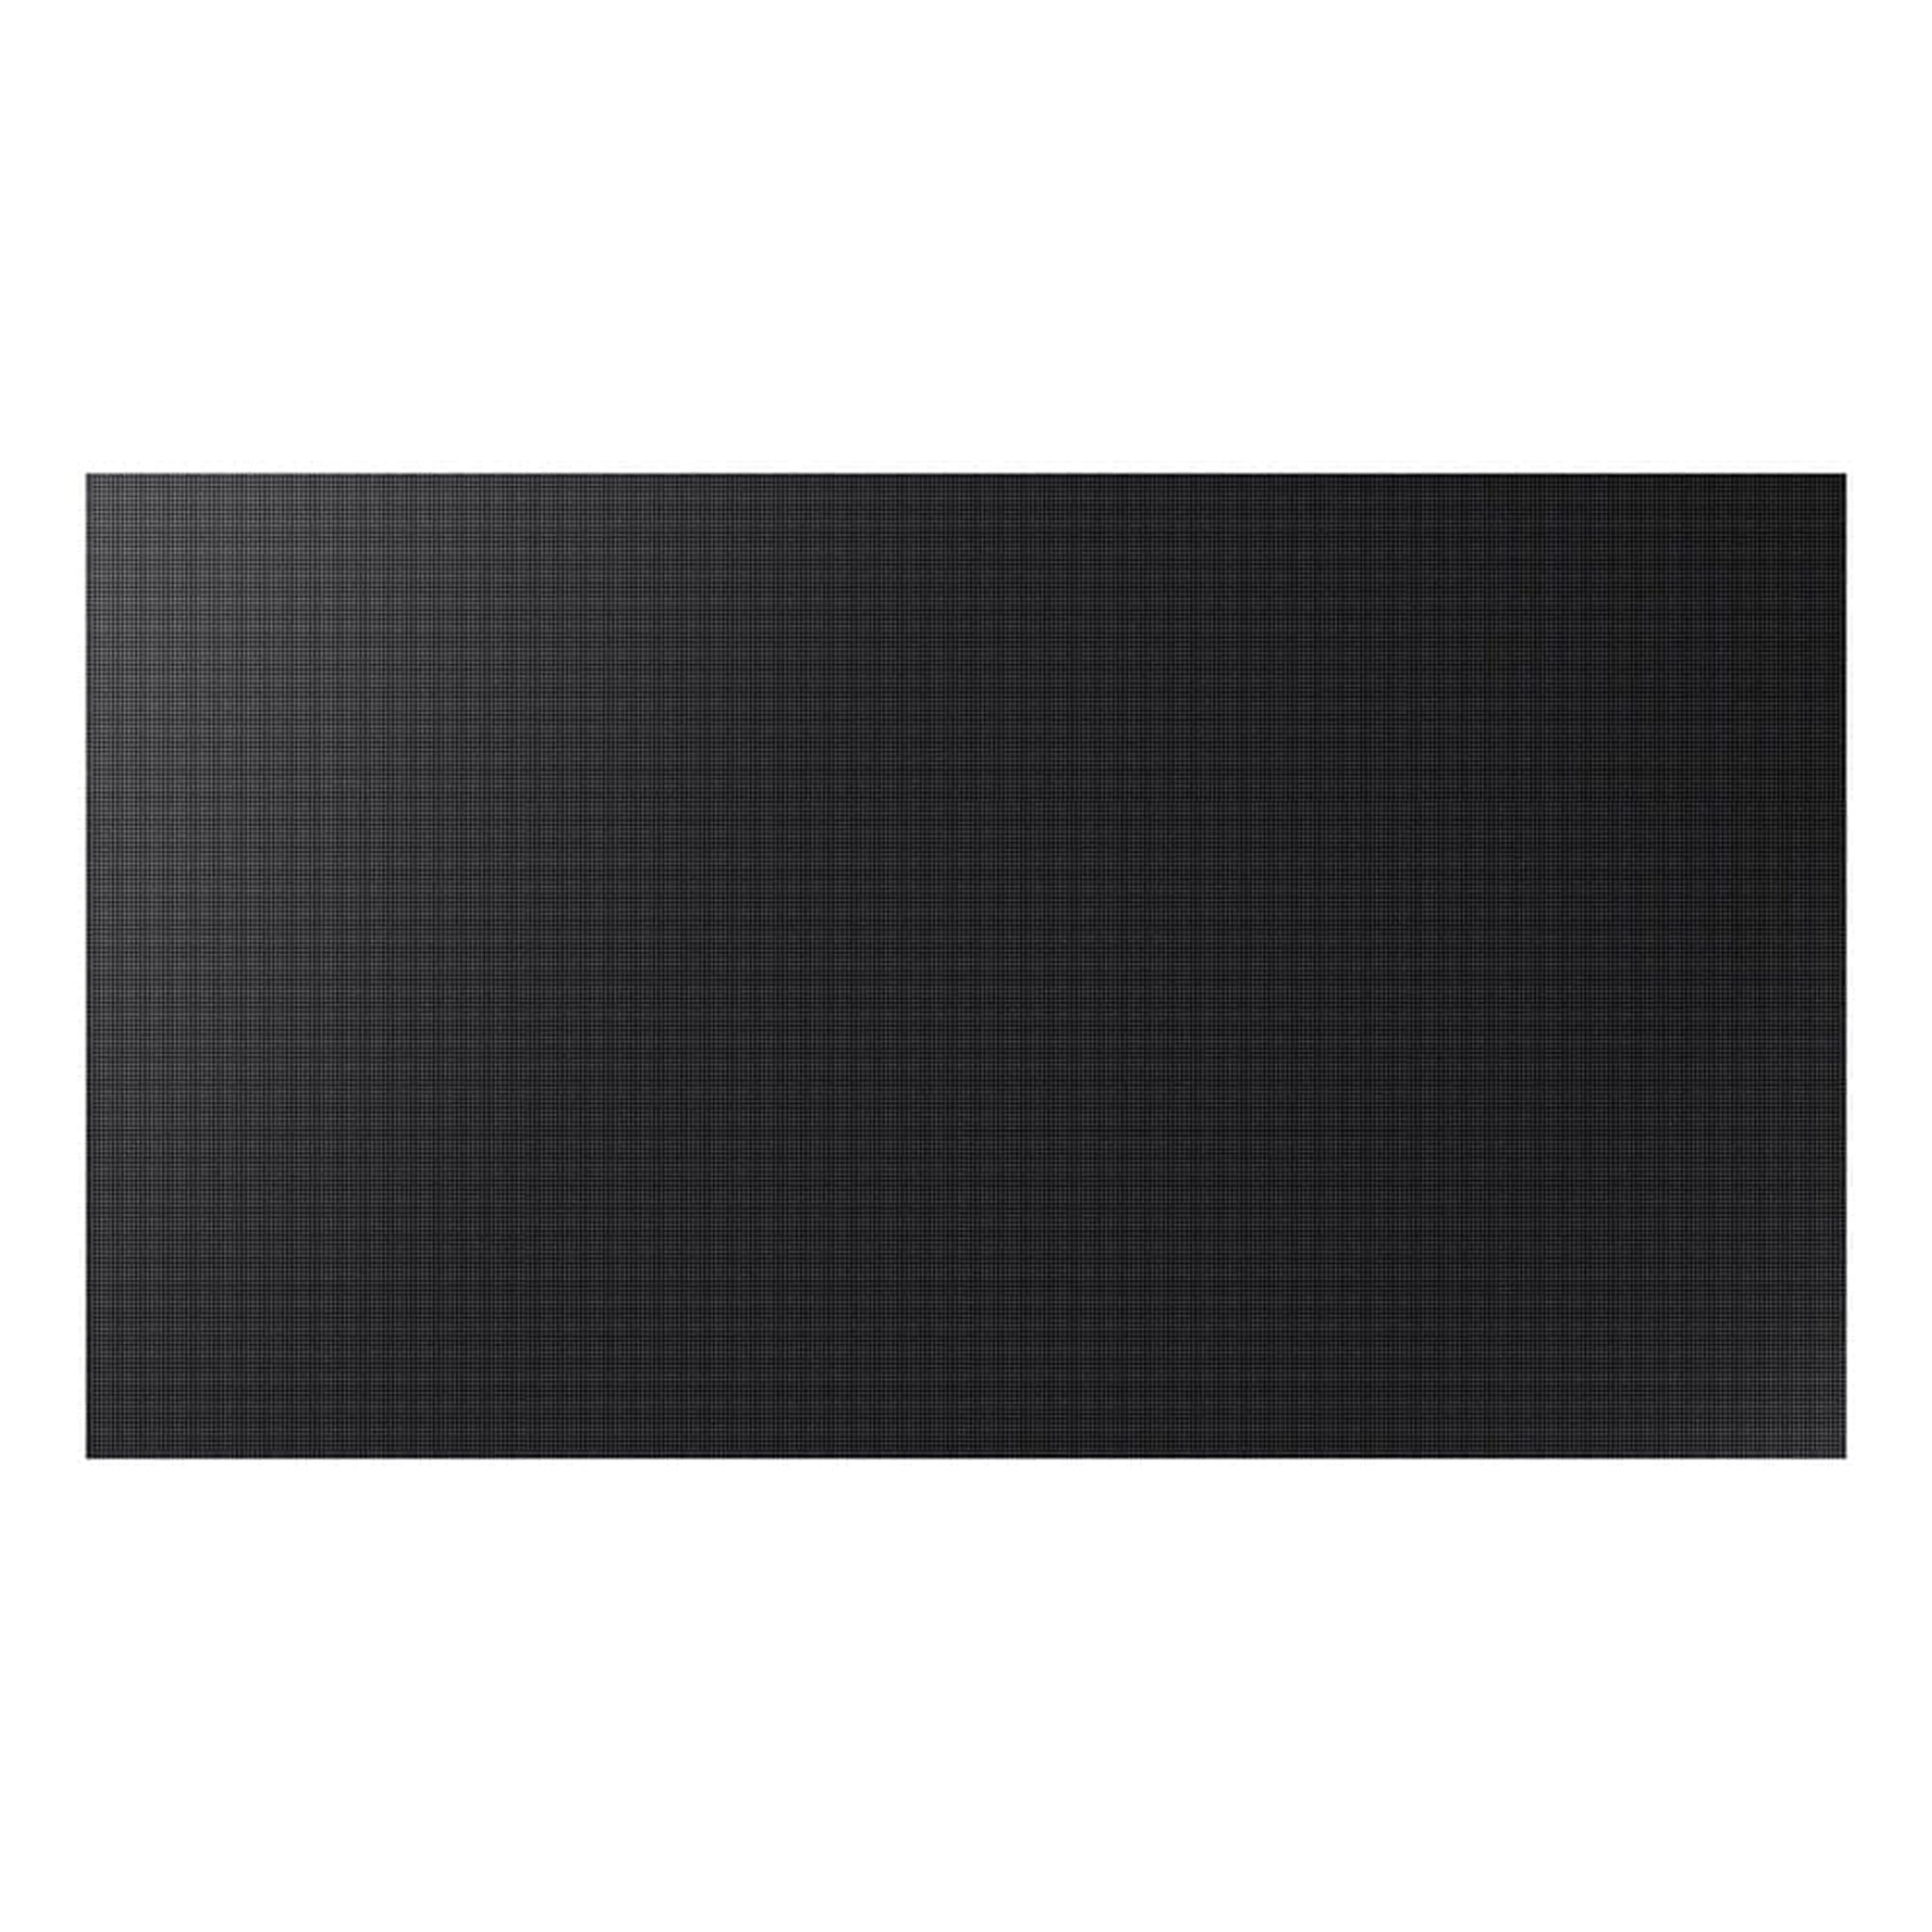 SAMSUNG LED MODULE - IE040R - Pixel Pitch 1.5 / 2 / 2.5 / 4